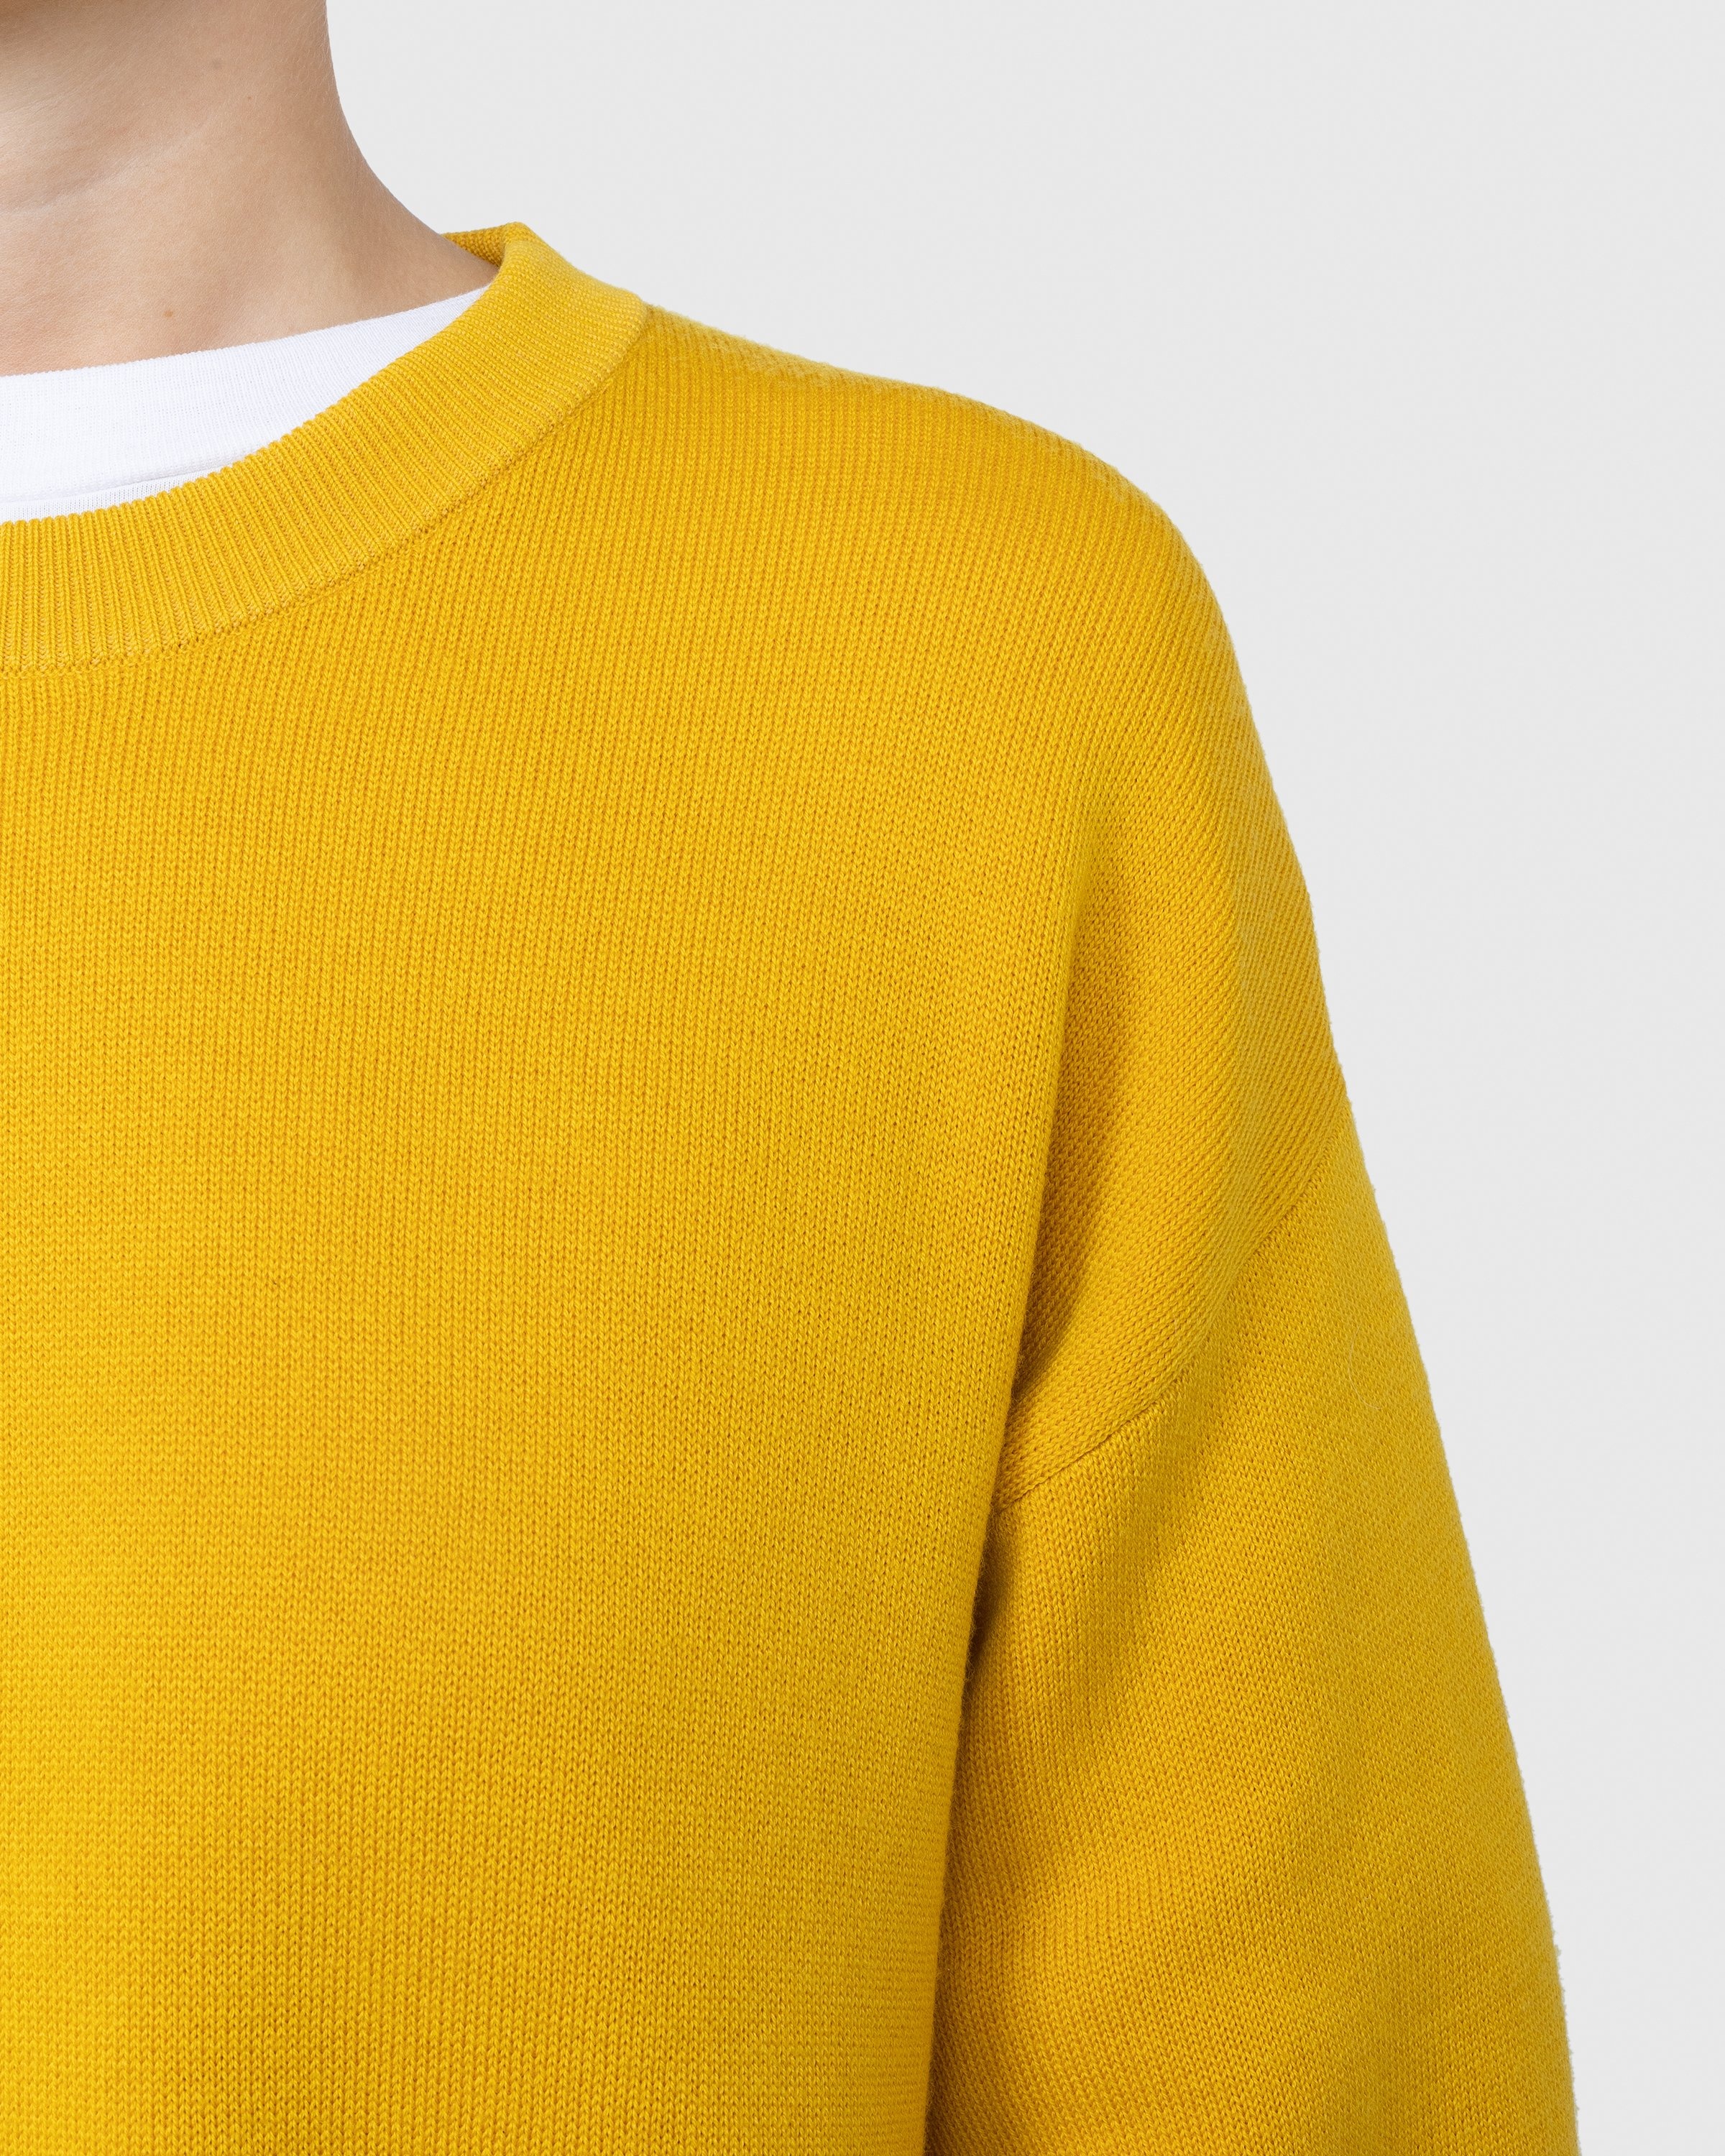 Acne Studios – Merino Wool Crewneck Sweater Yellow - Crewnecks - Yellow - Image 6